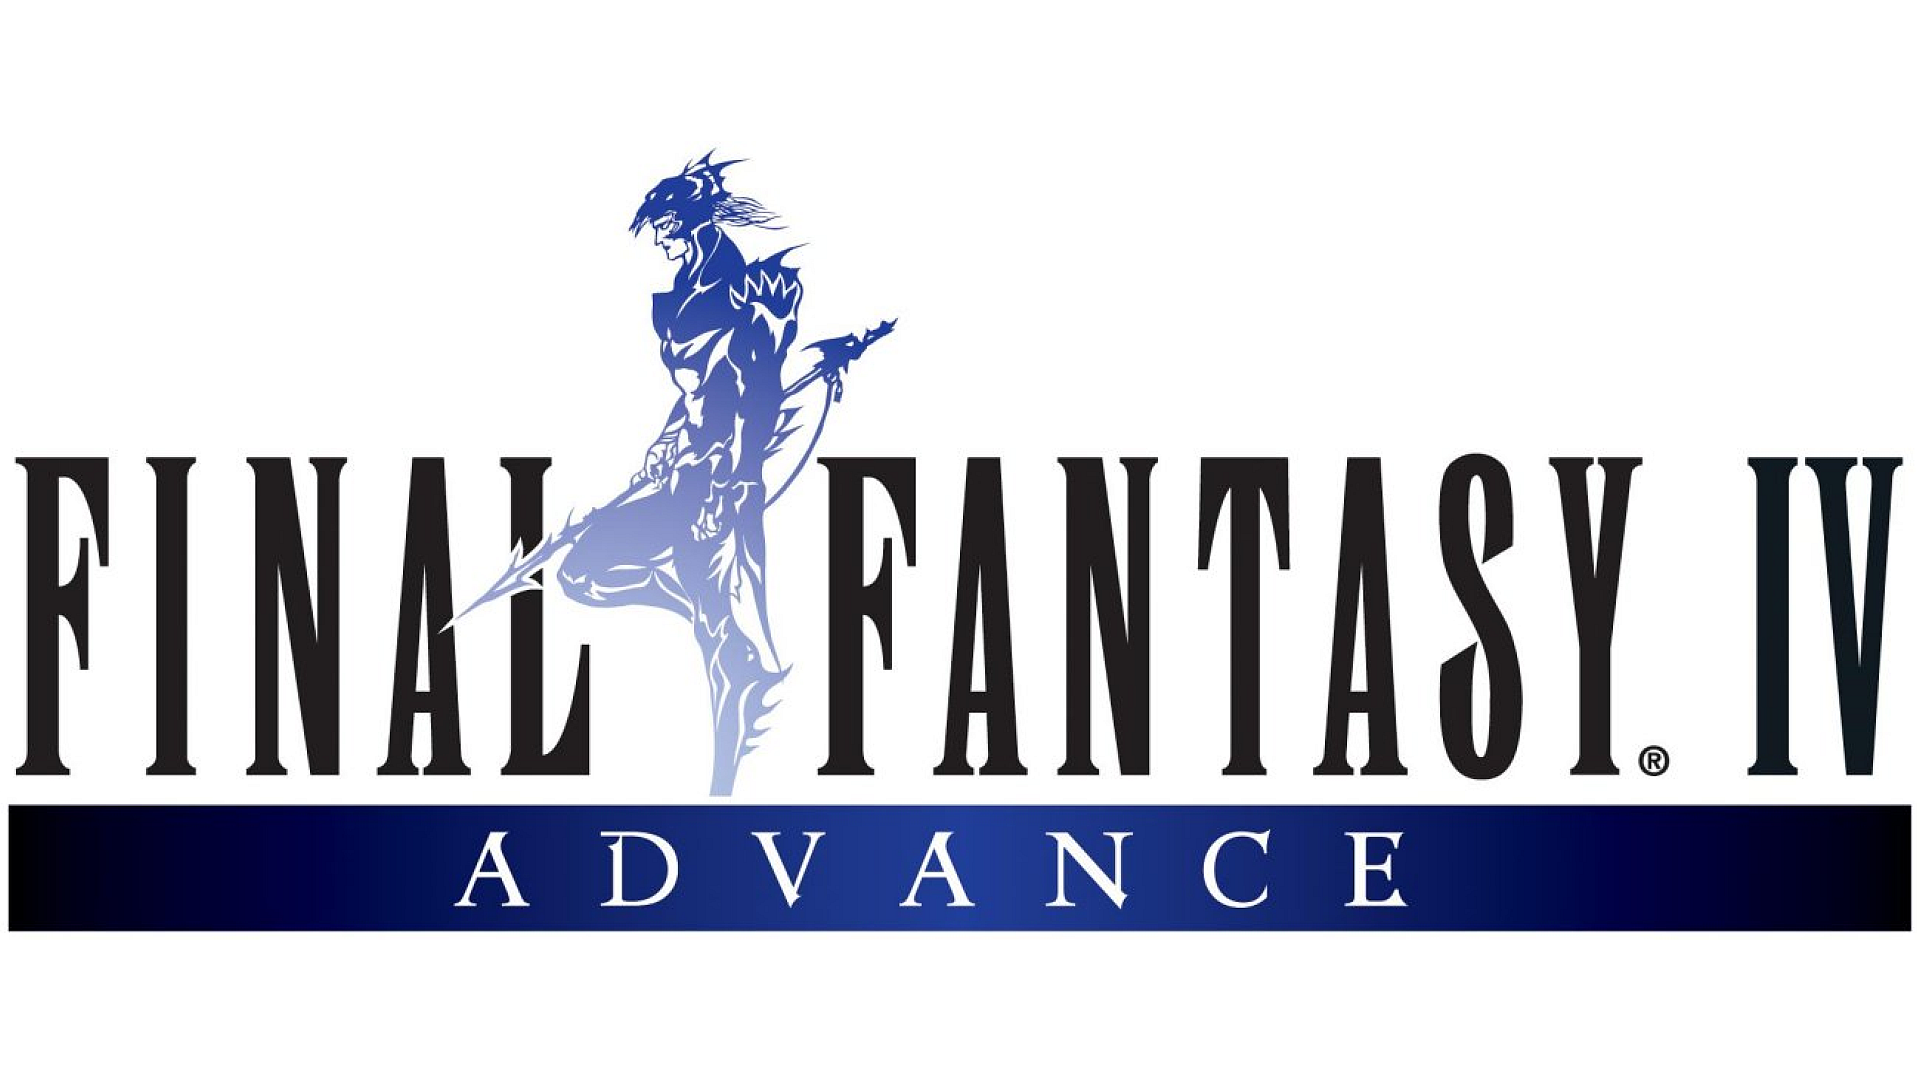 Final Fantasy IV Advance Logo